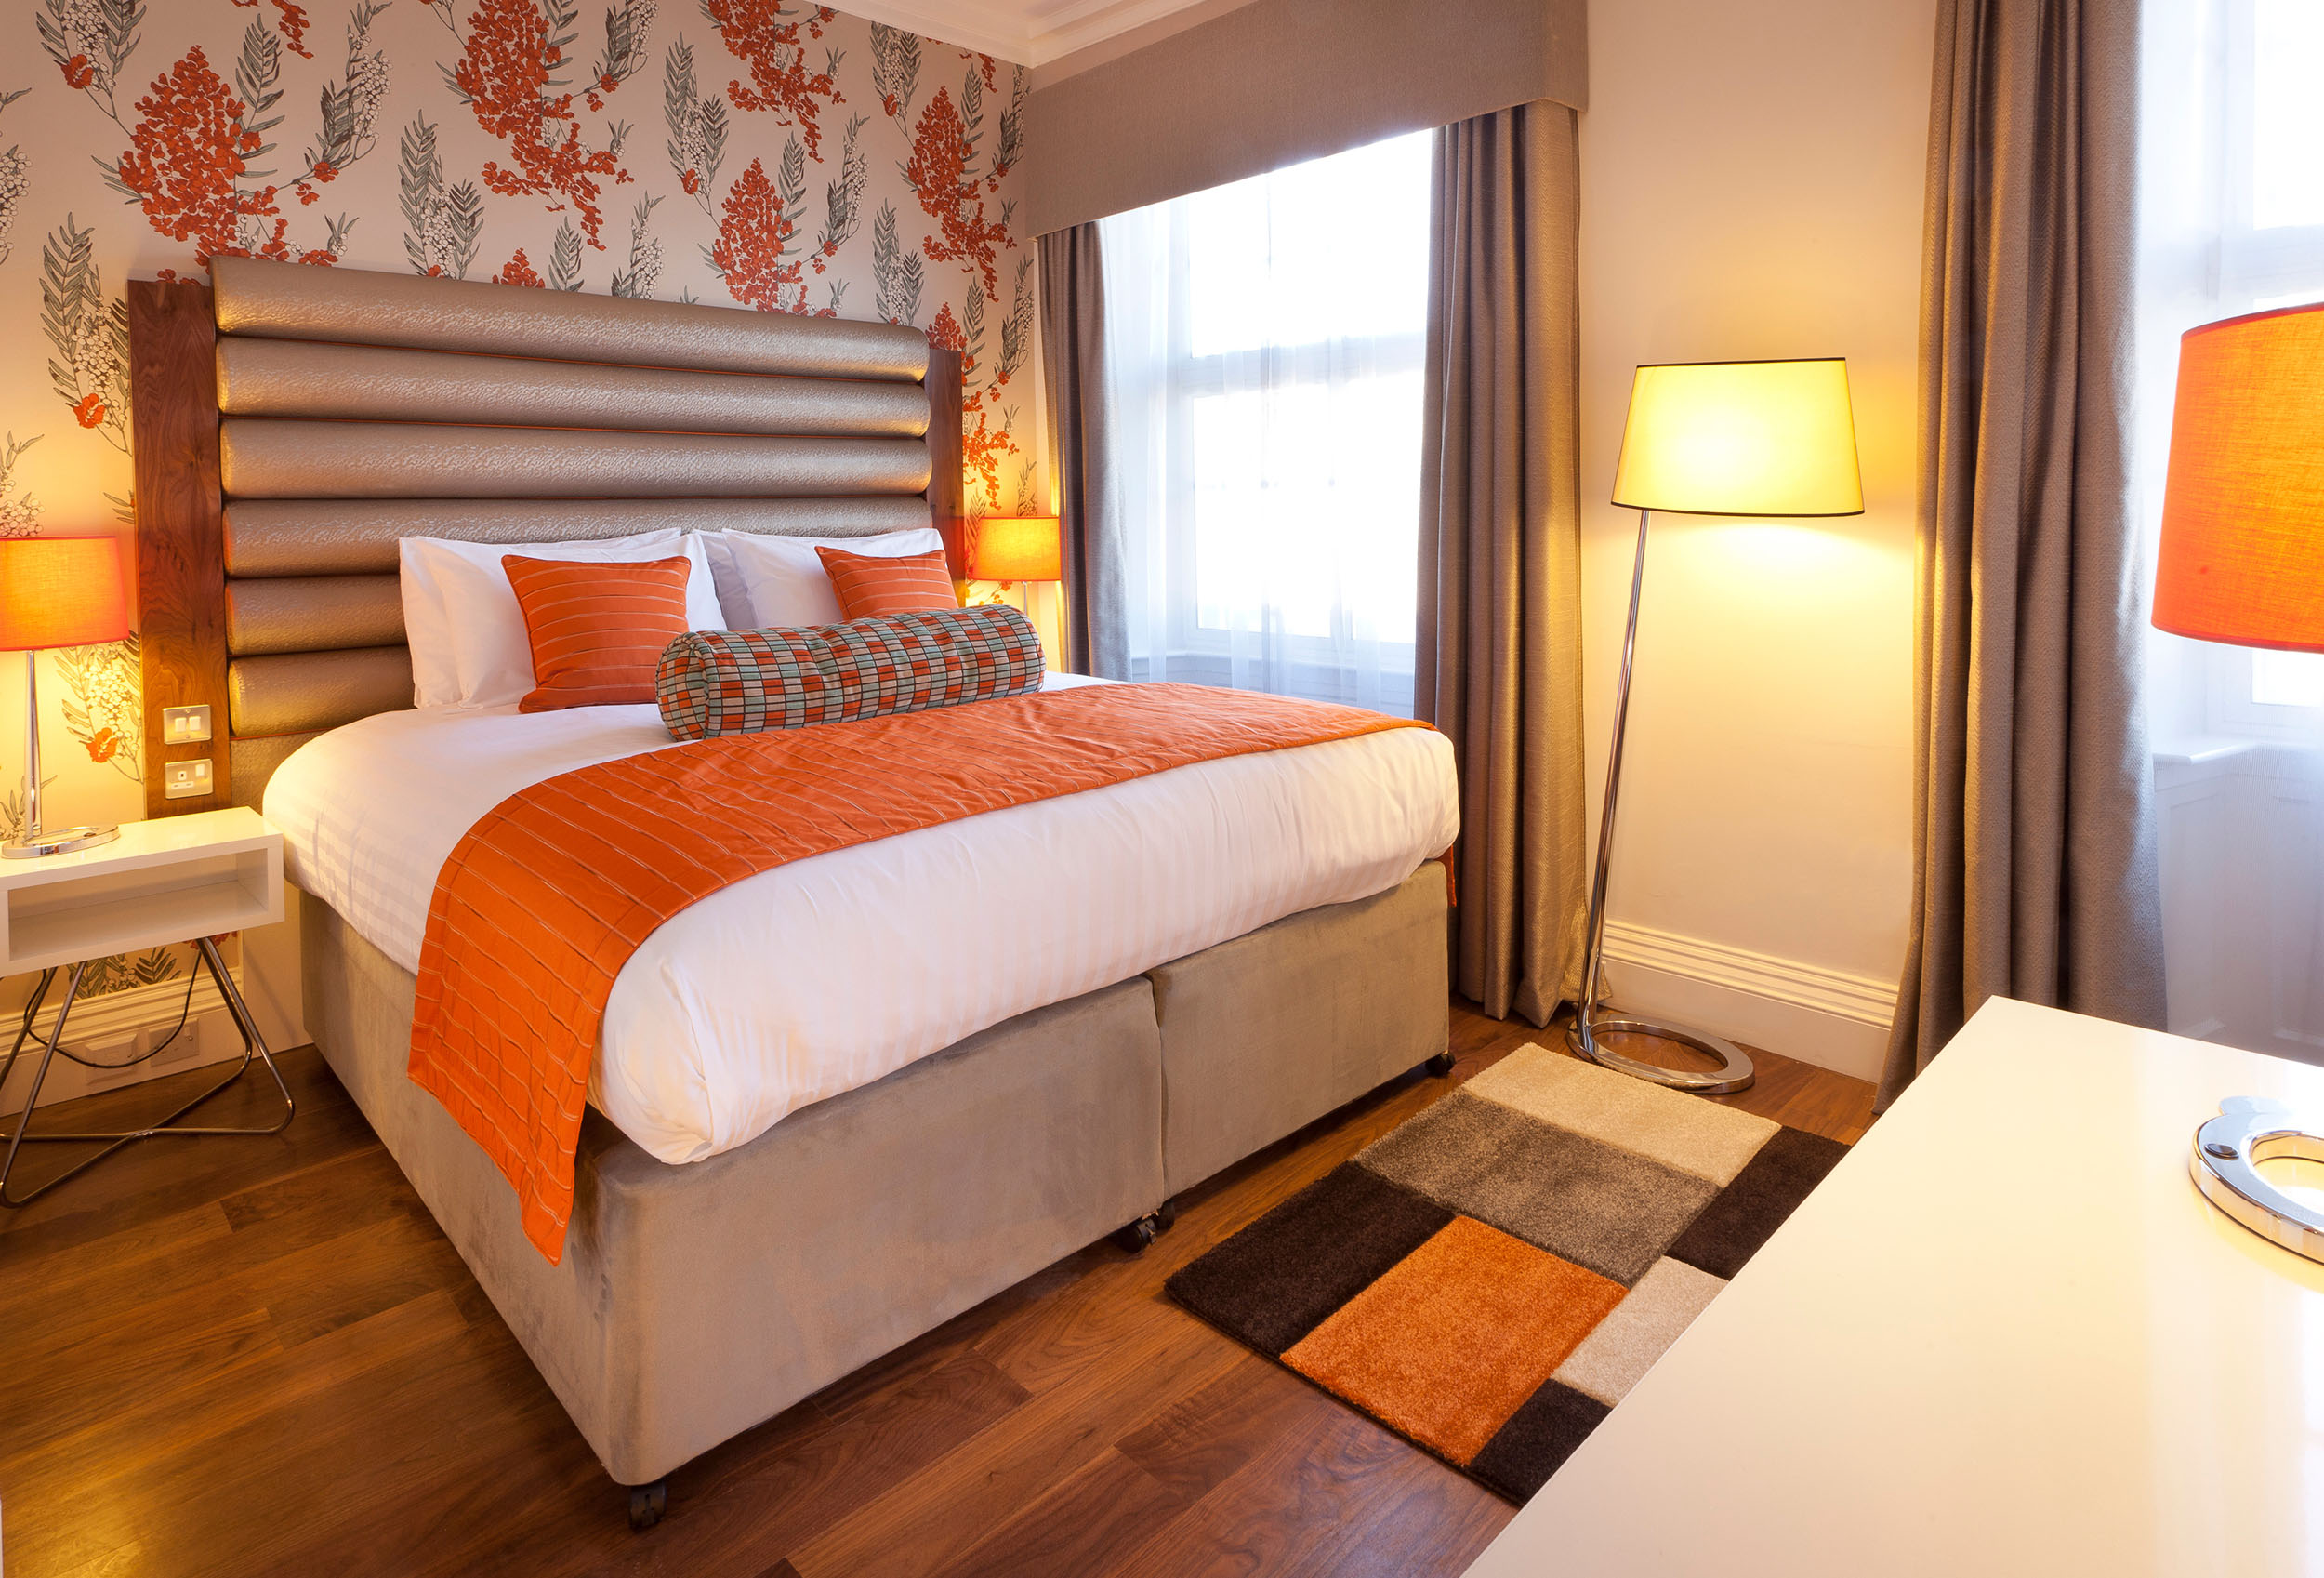 Hotel Indigo Standard room in orange with floral wallpaper